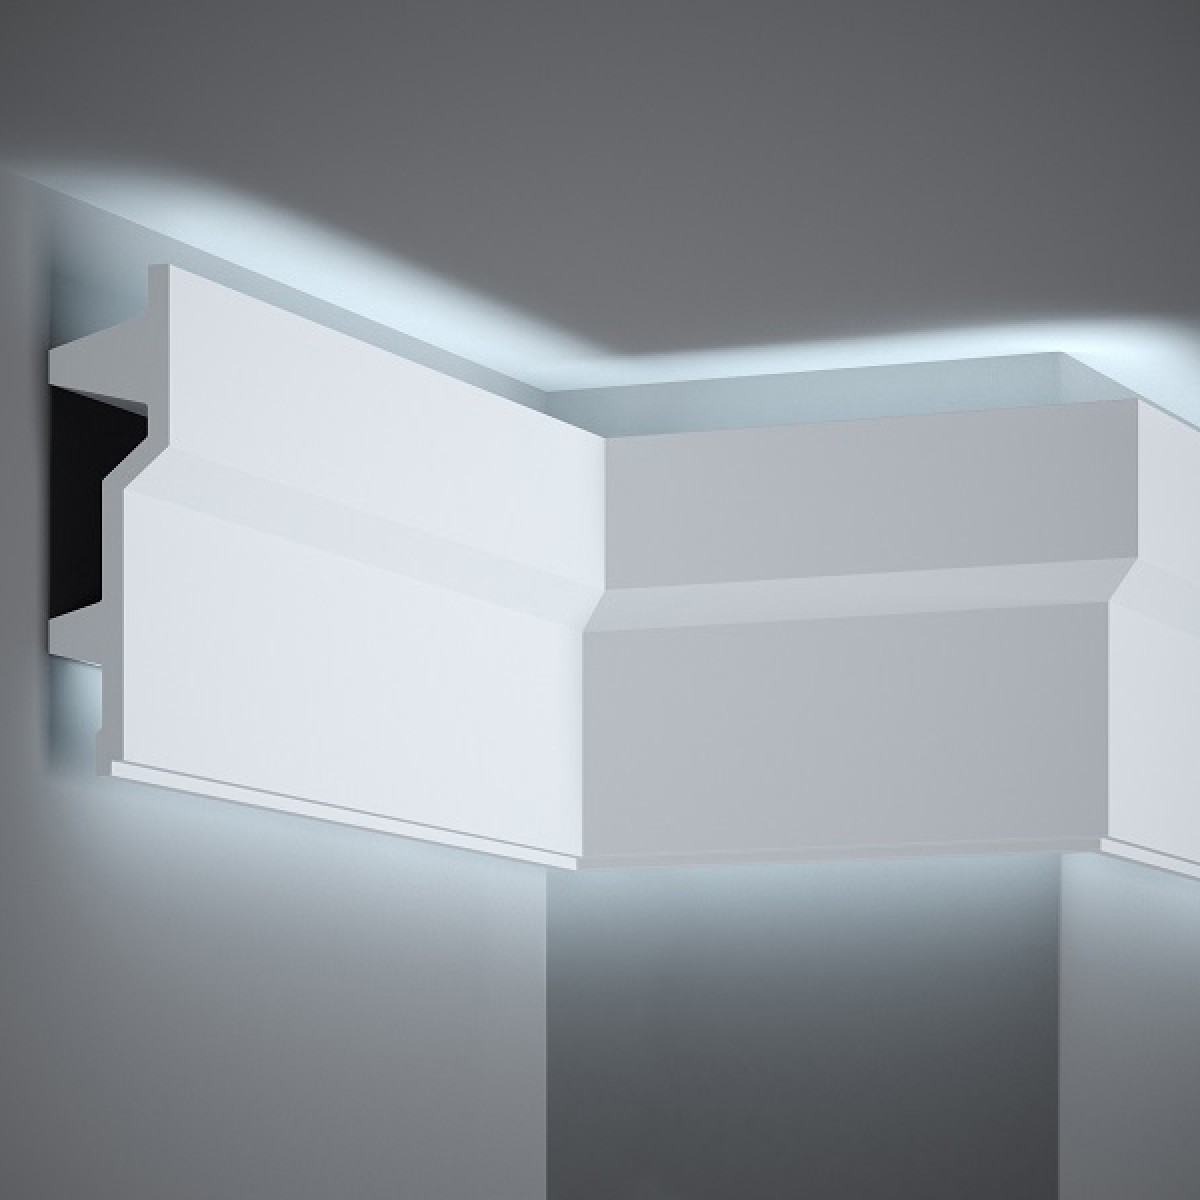 Scafe tavan (iluminat indirect, LED) Mardom Decor MRD-MDB150, material: ProFoam